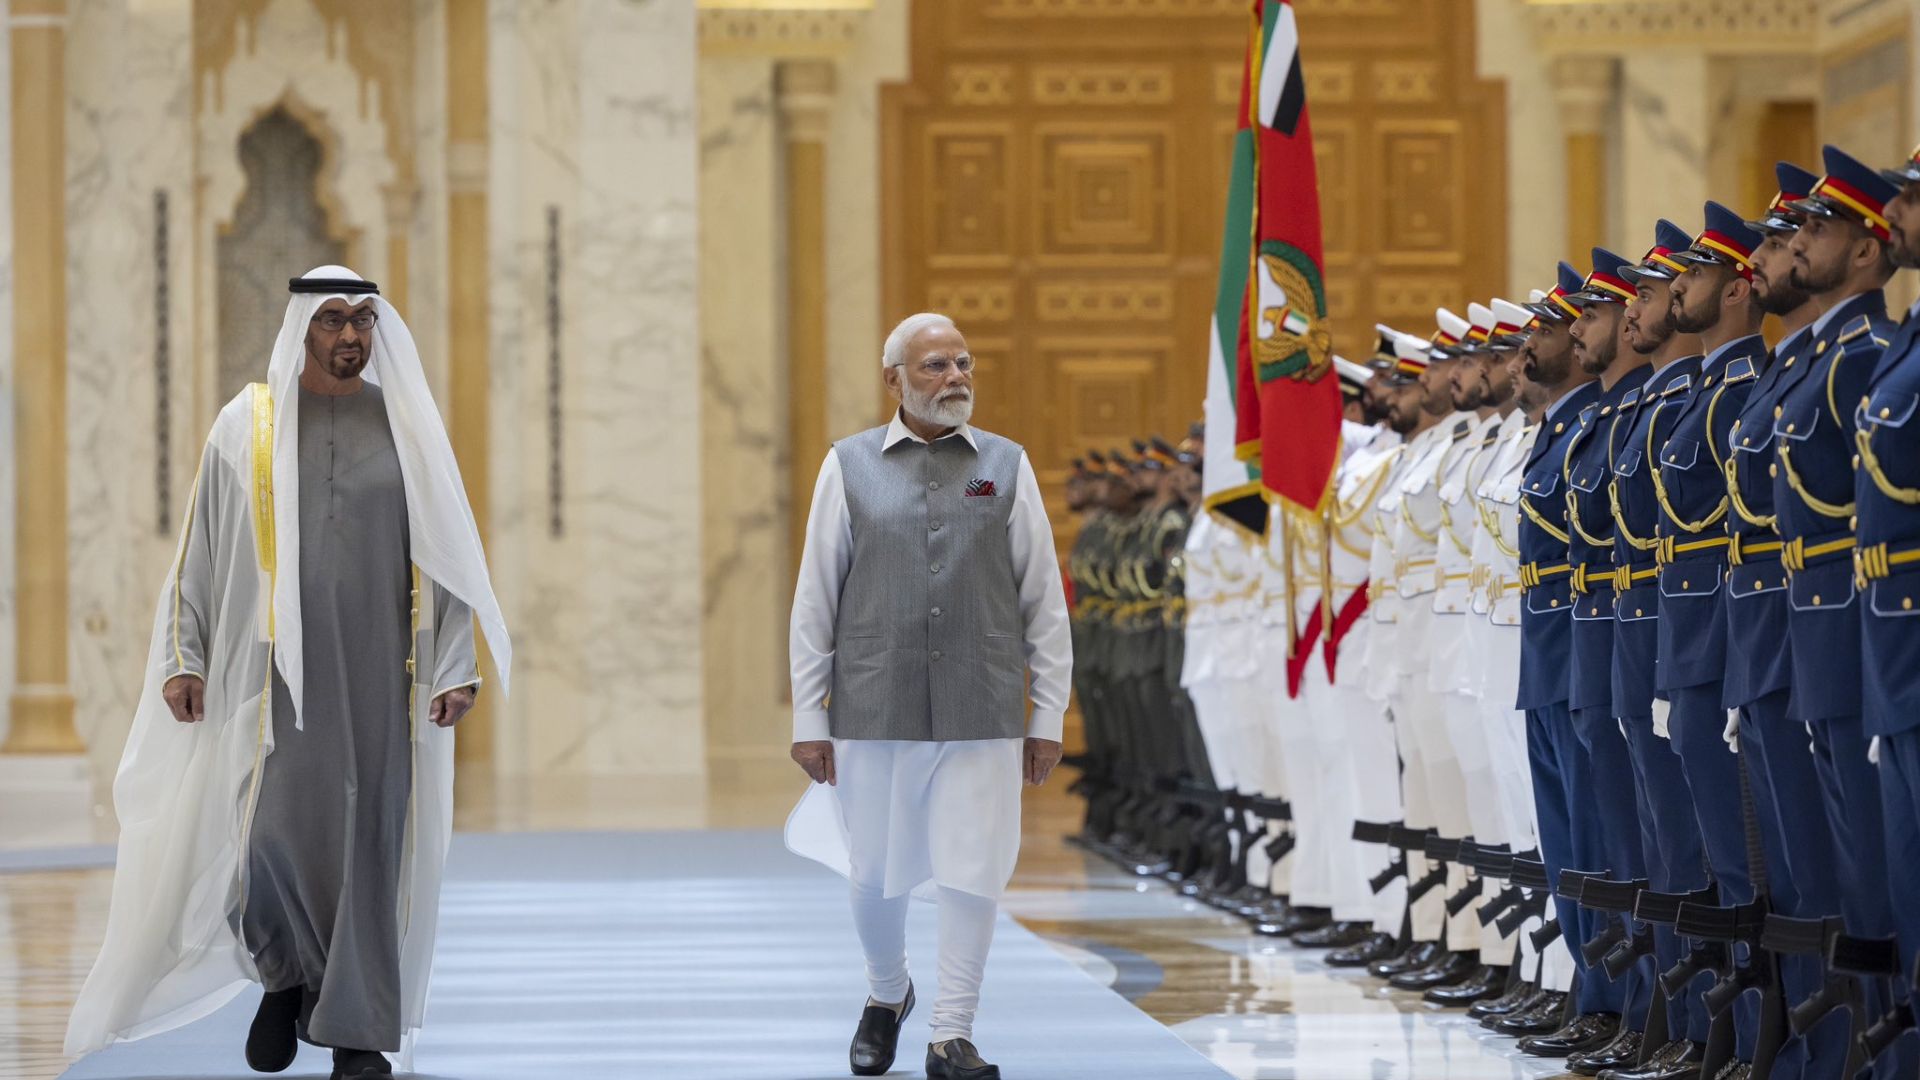 PM Modi’s 2nd Temple Inauguration In A Row